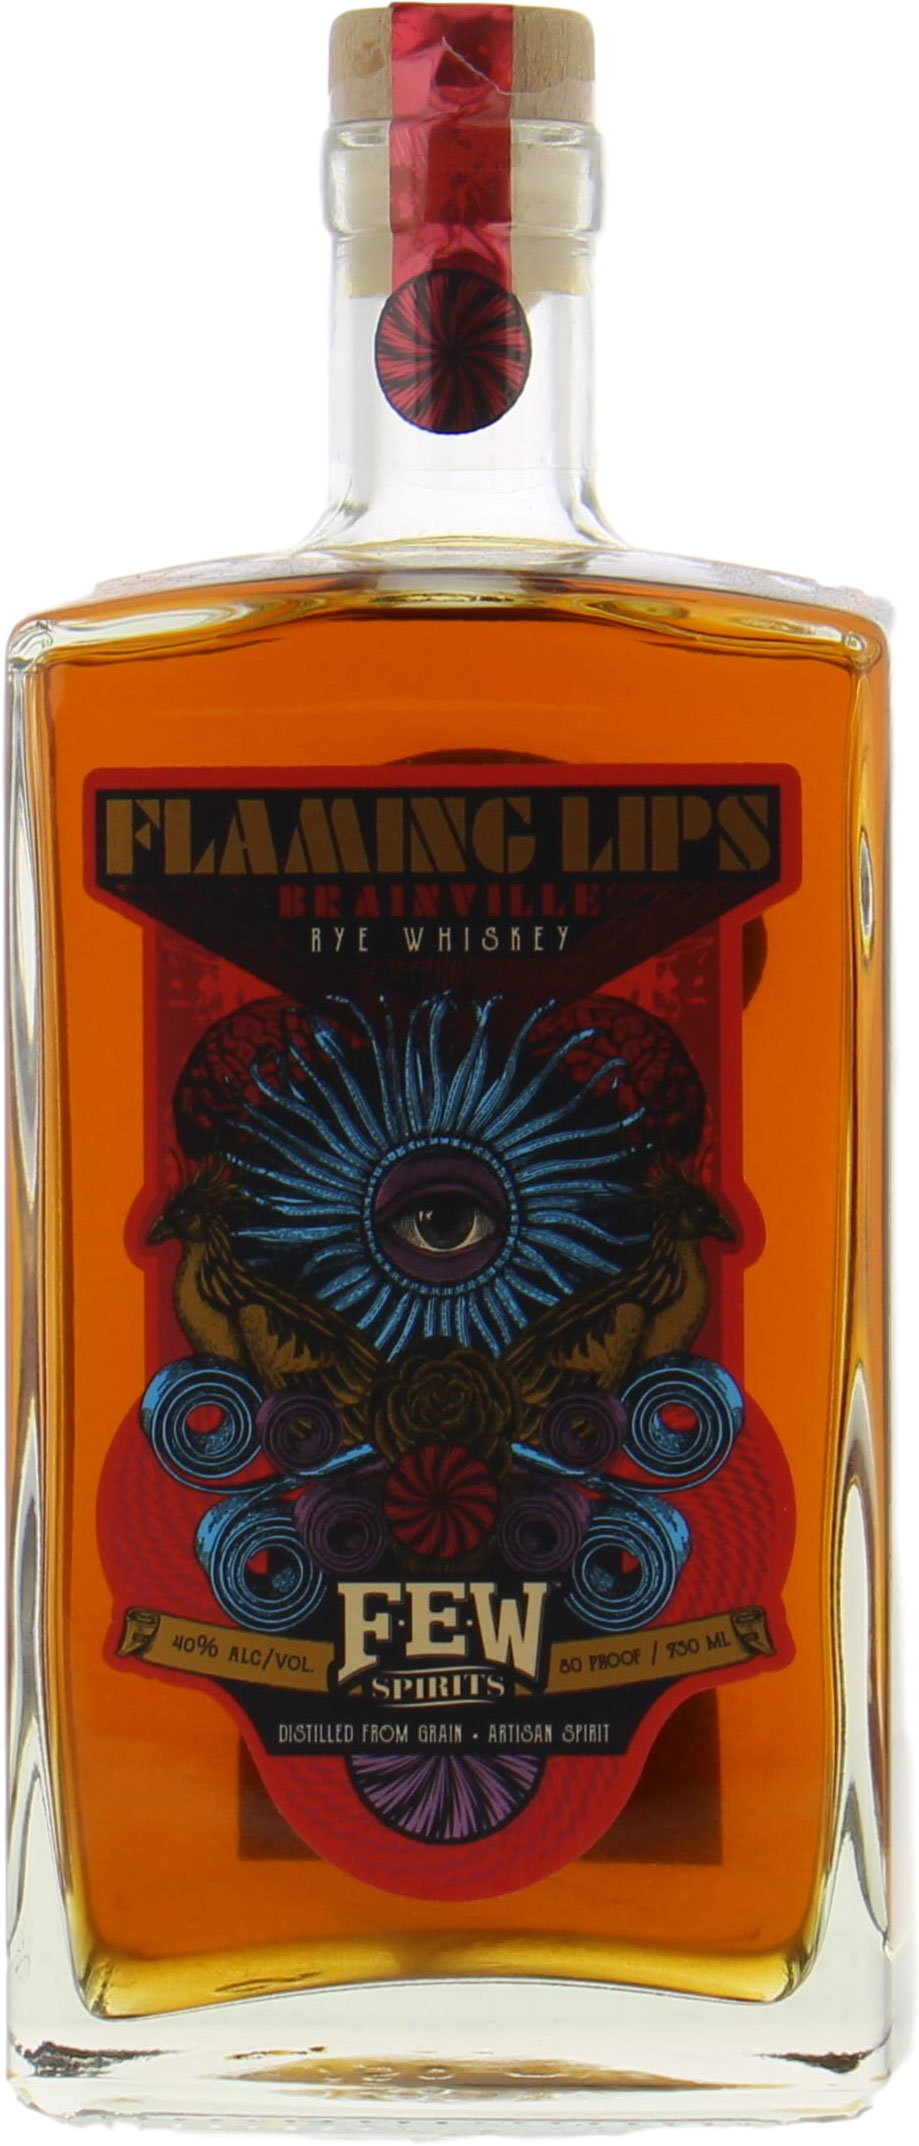 FEW Spirits - Flaming Lips Brainville Rye 40% NV Perfect